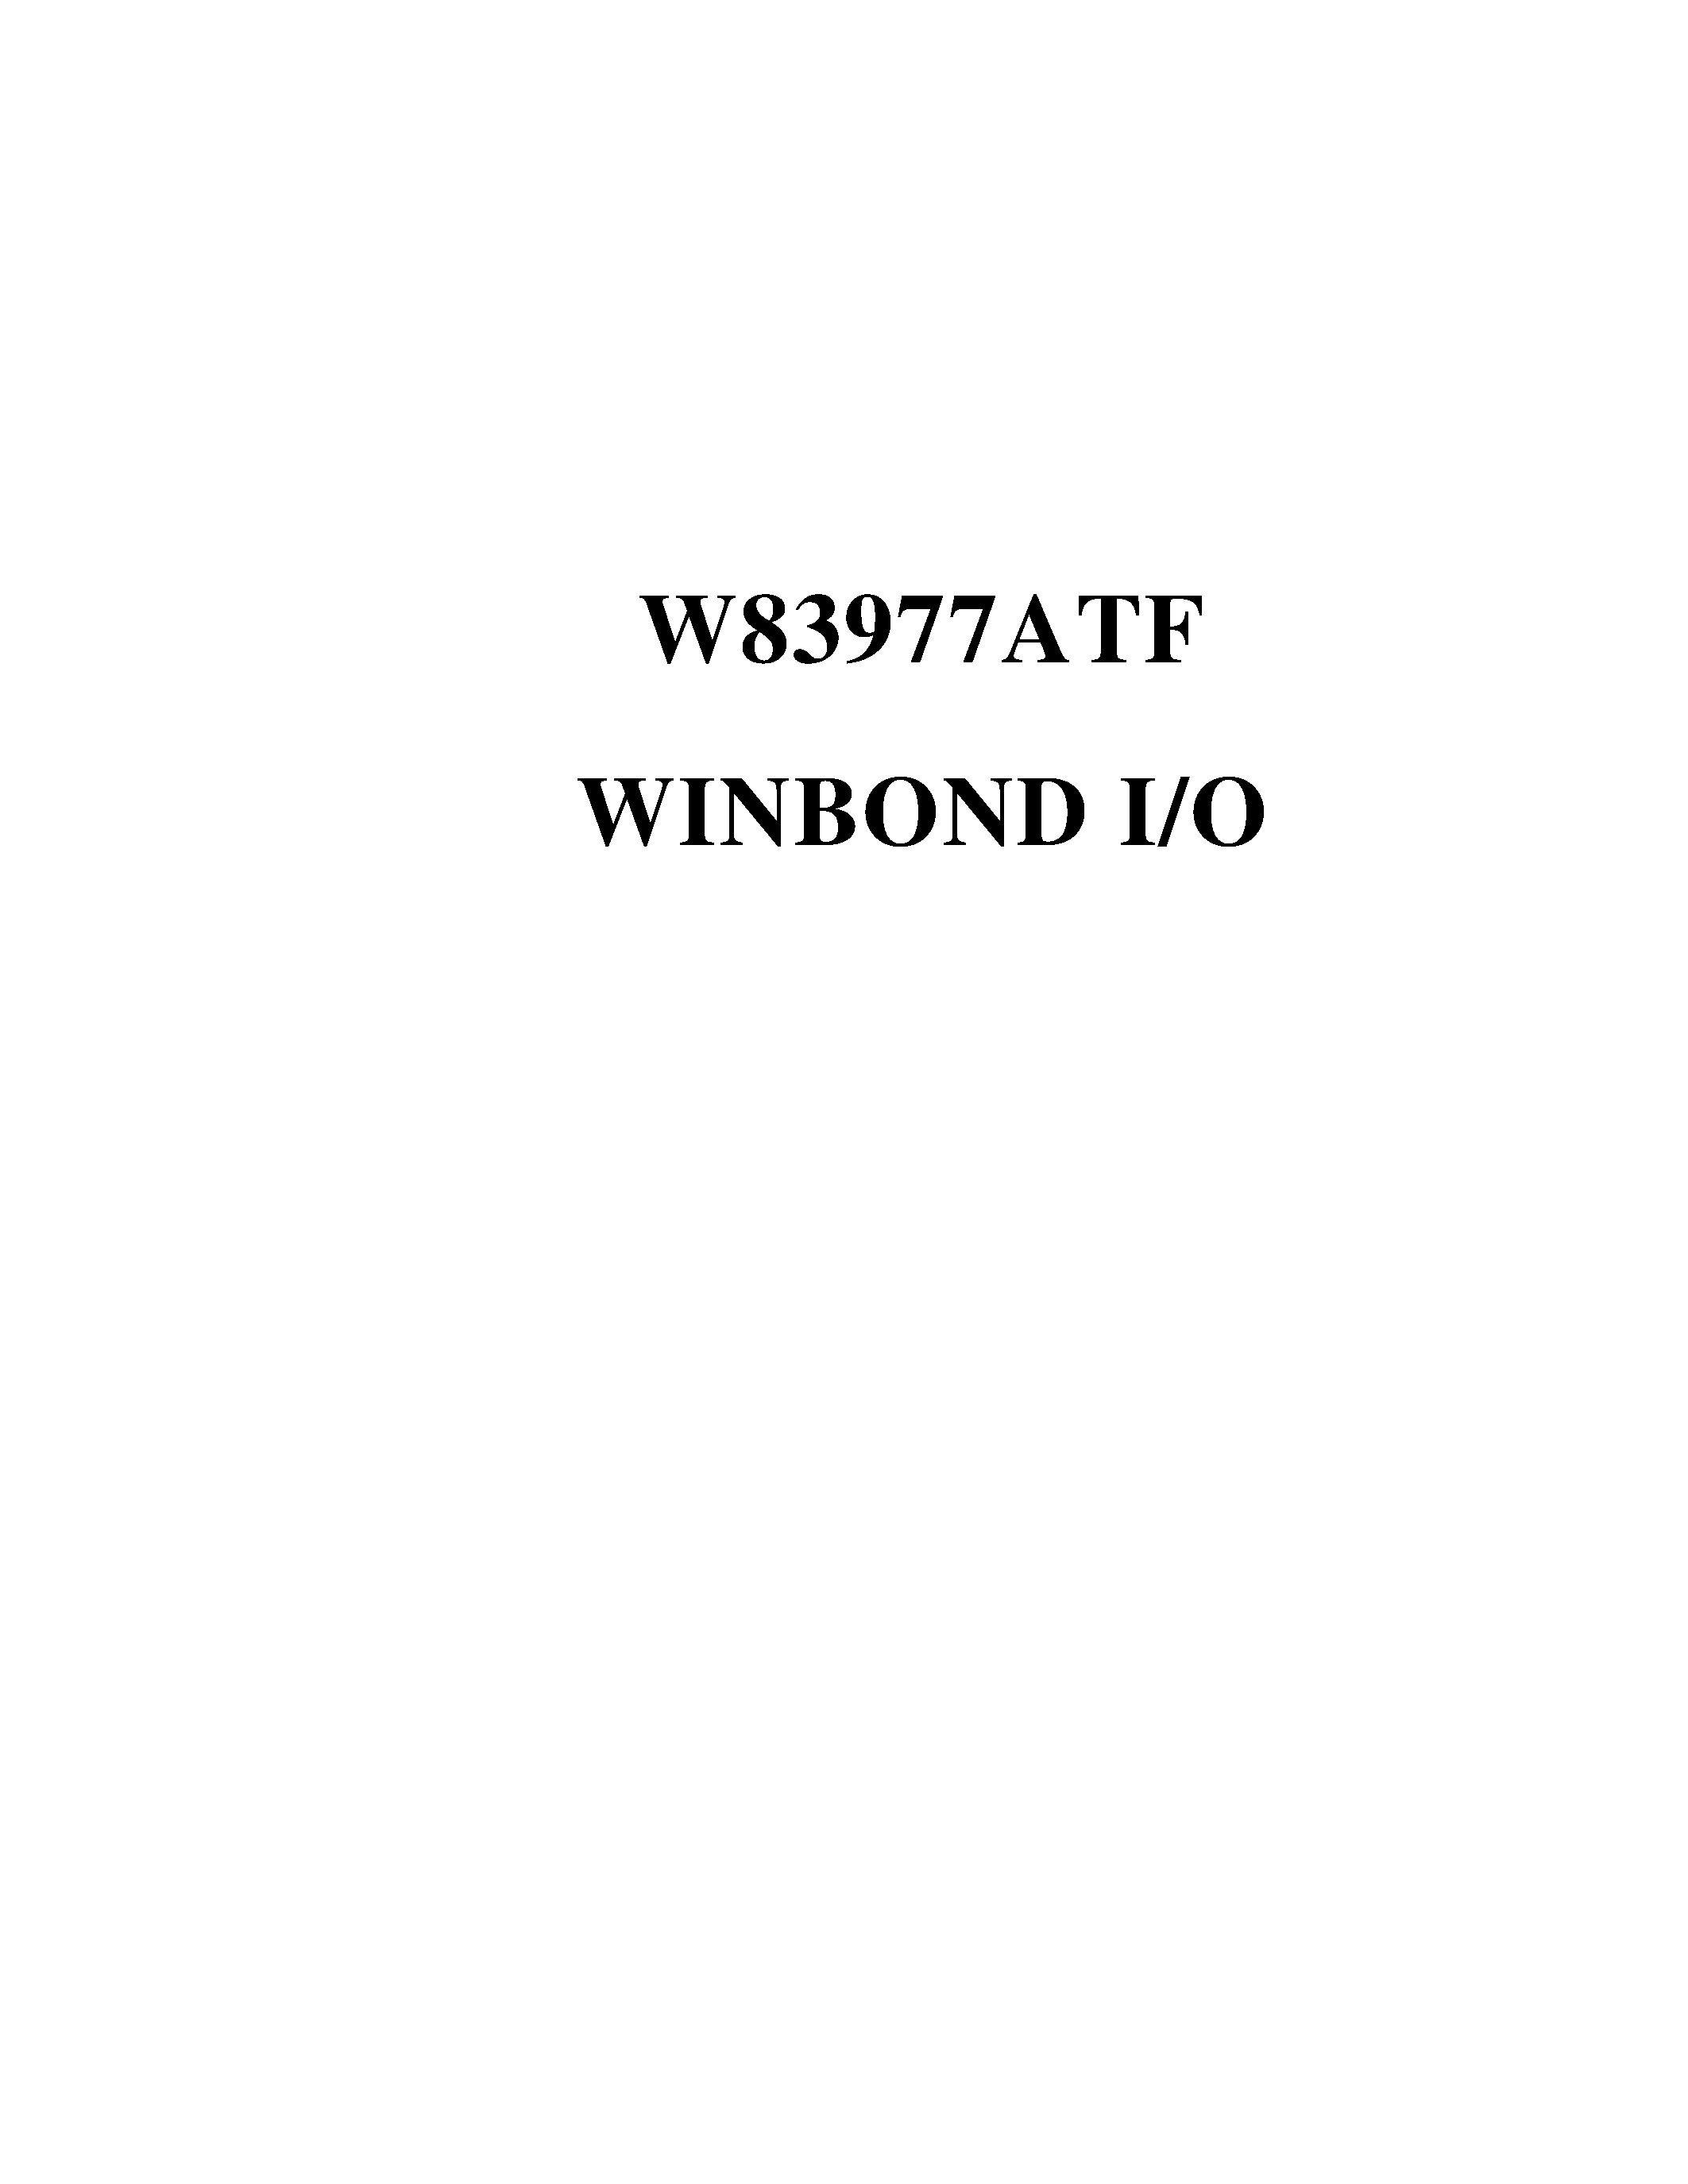 Datasheet W83977ATF - WINBOND I/O page 1